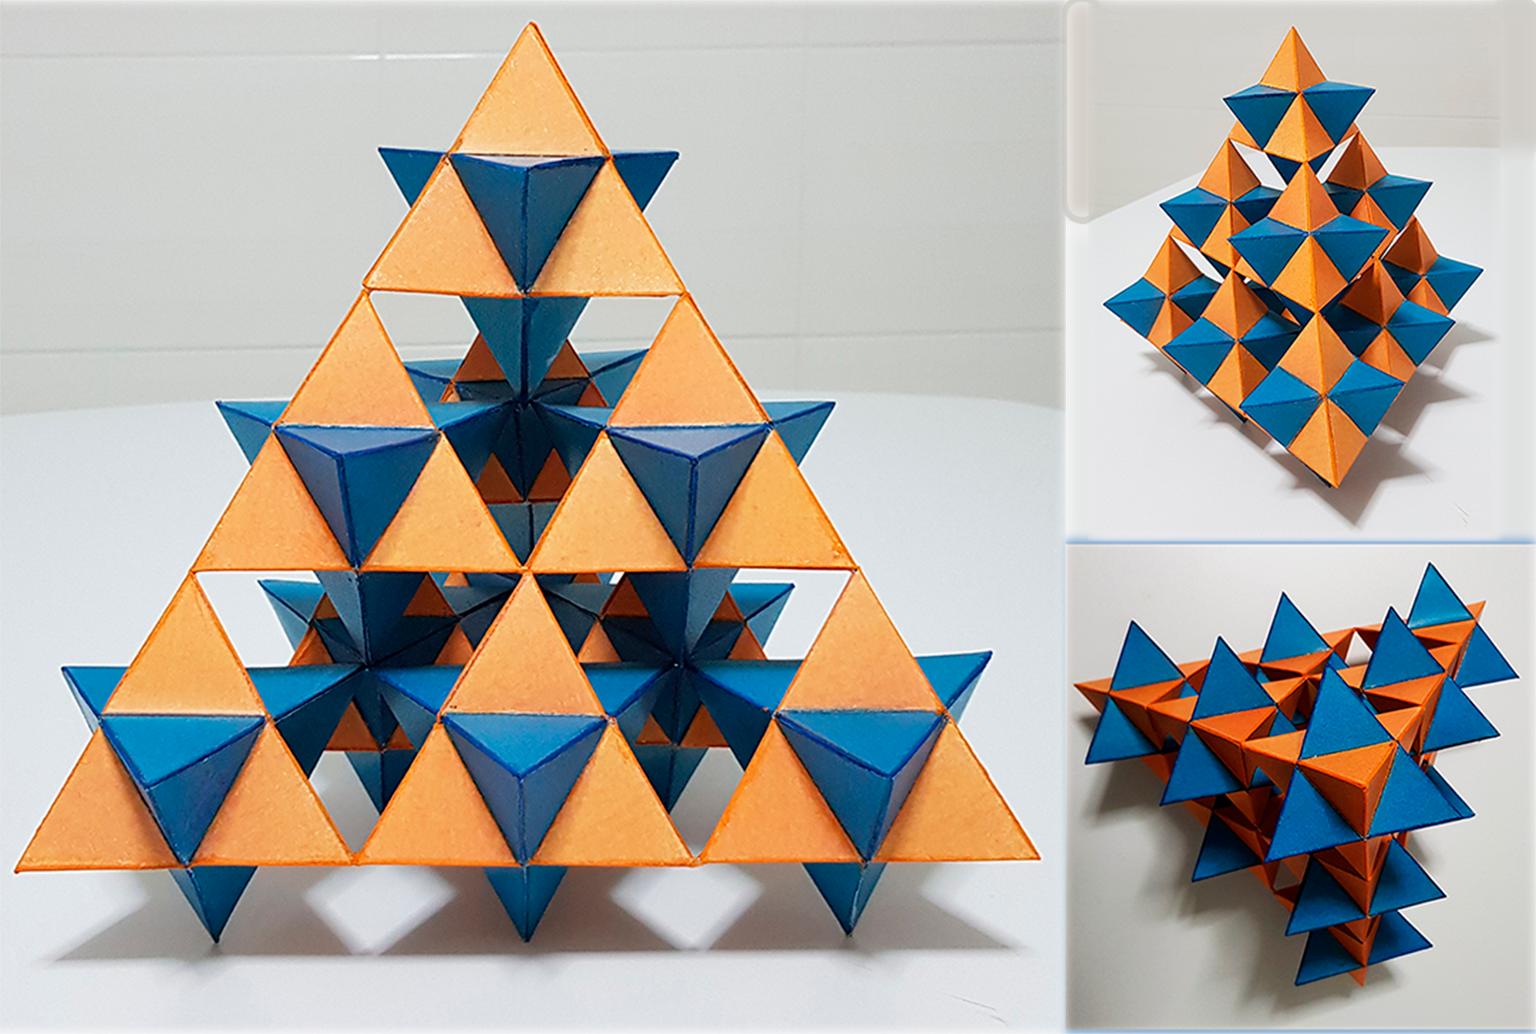 Image for entry 'Sierpinski tetrahedral of Stella octangula'